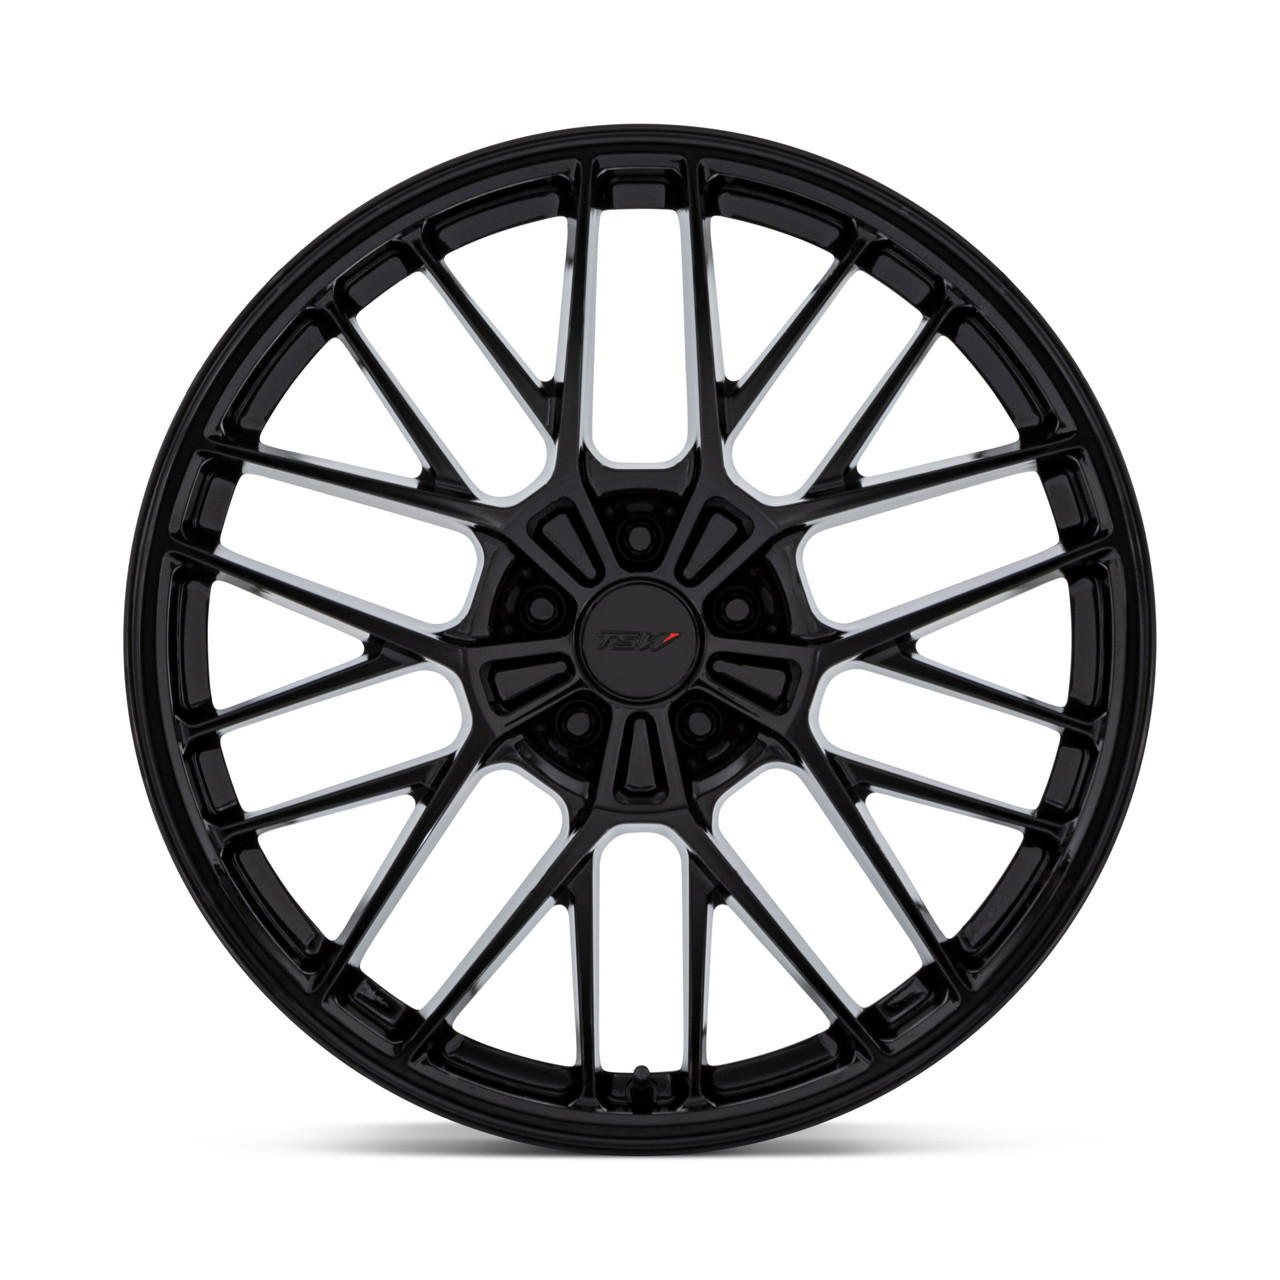 Set 4 19" TSW TW001 Daytona Gloss Black 19x10.5 5x112 35mm Flow Formed Wheels